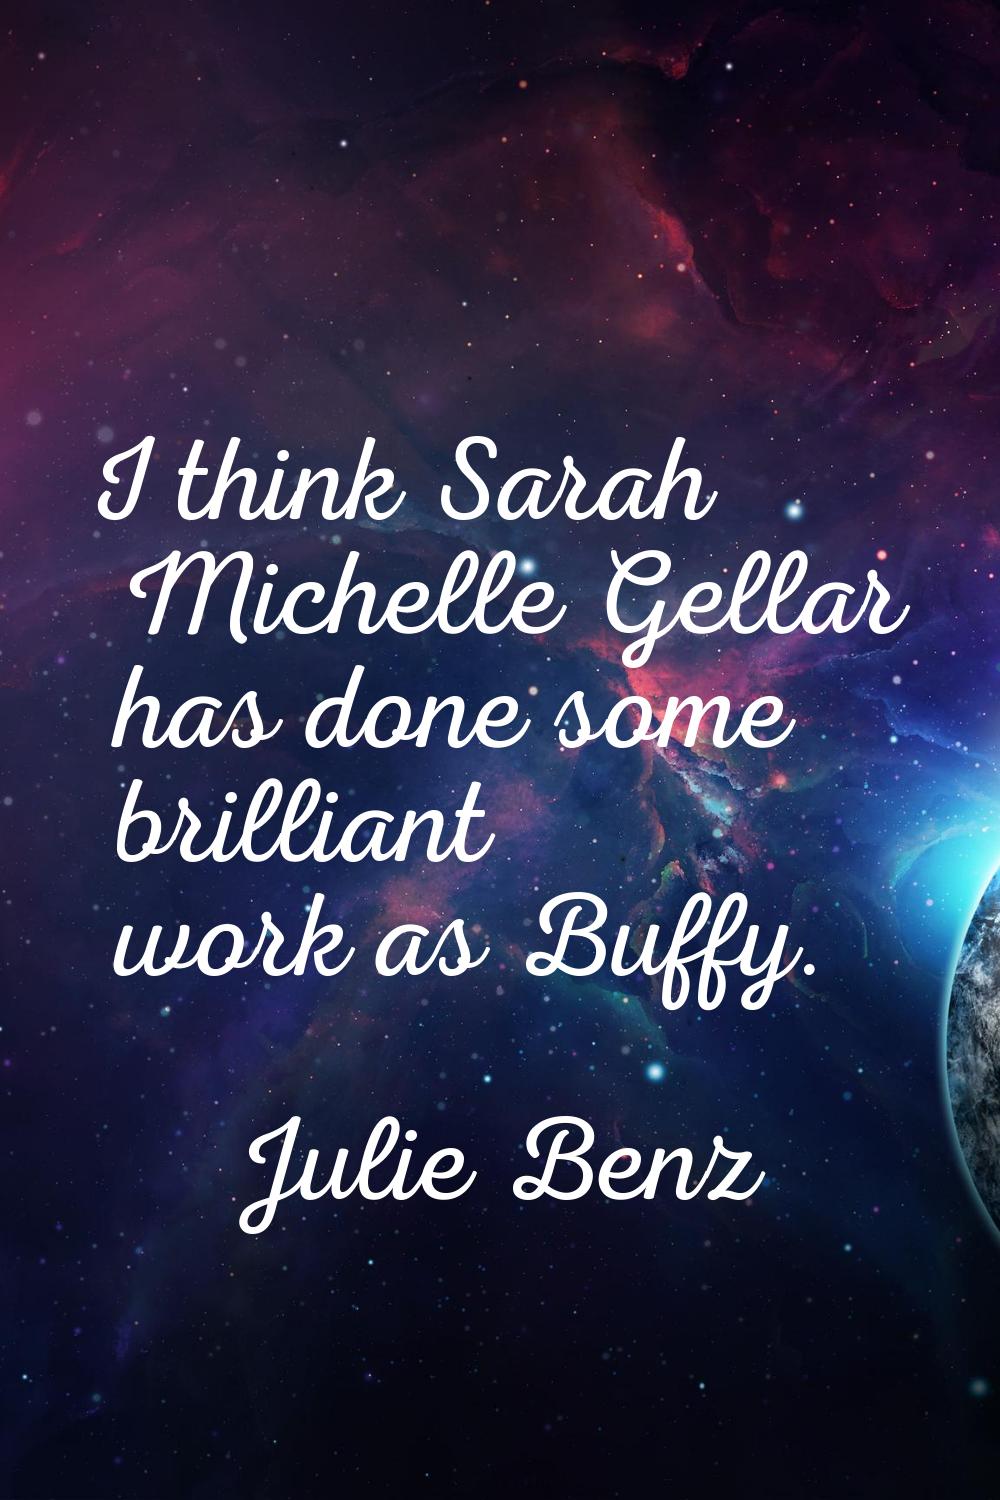 I think Sarah Michelle Gellar has done some brilliant work as Buffy.